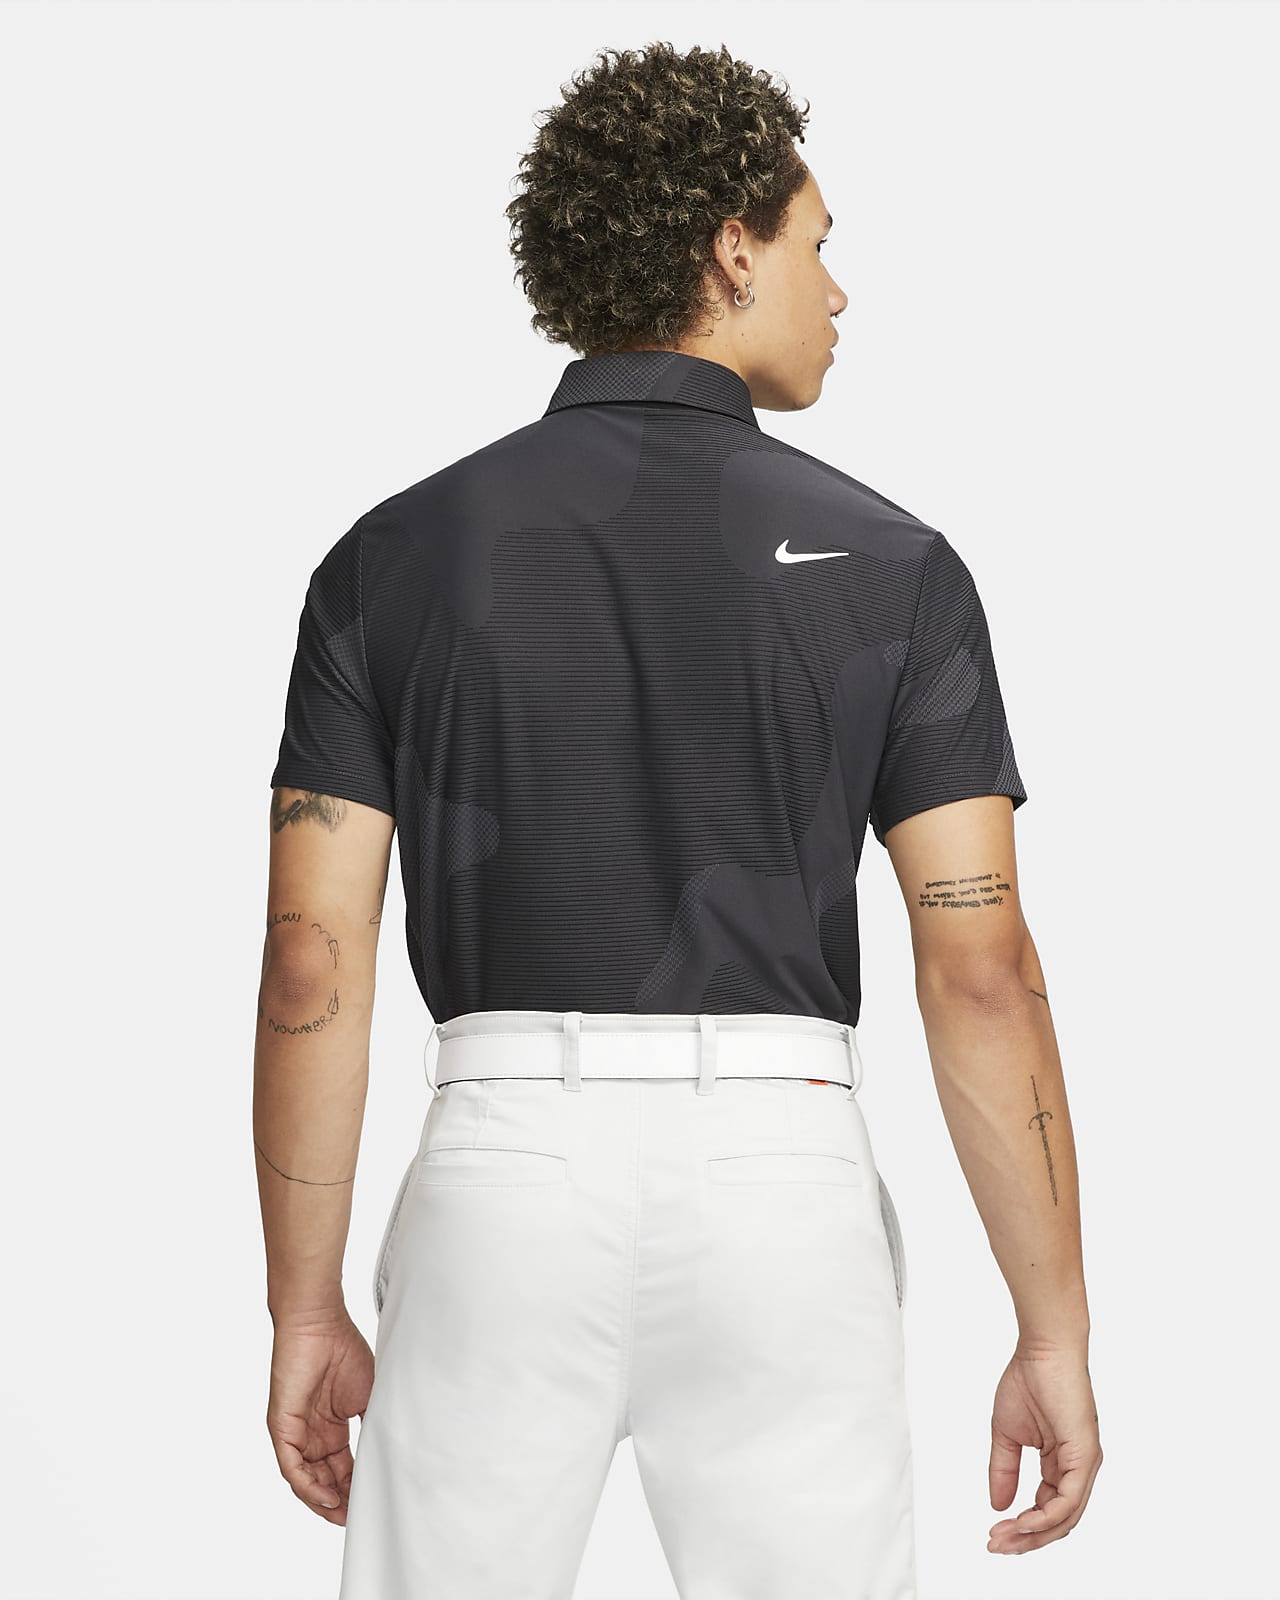 Golf Accessories & Equipment. Nike.com  Golf sleeves, Football dress, Golf  accessories